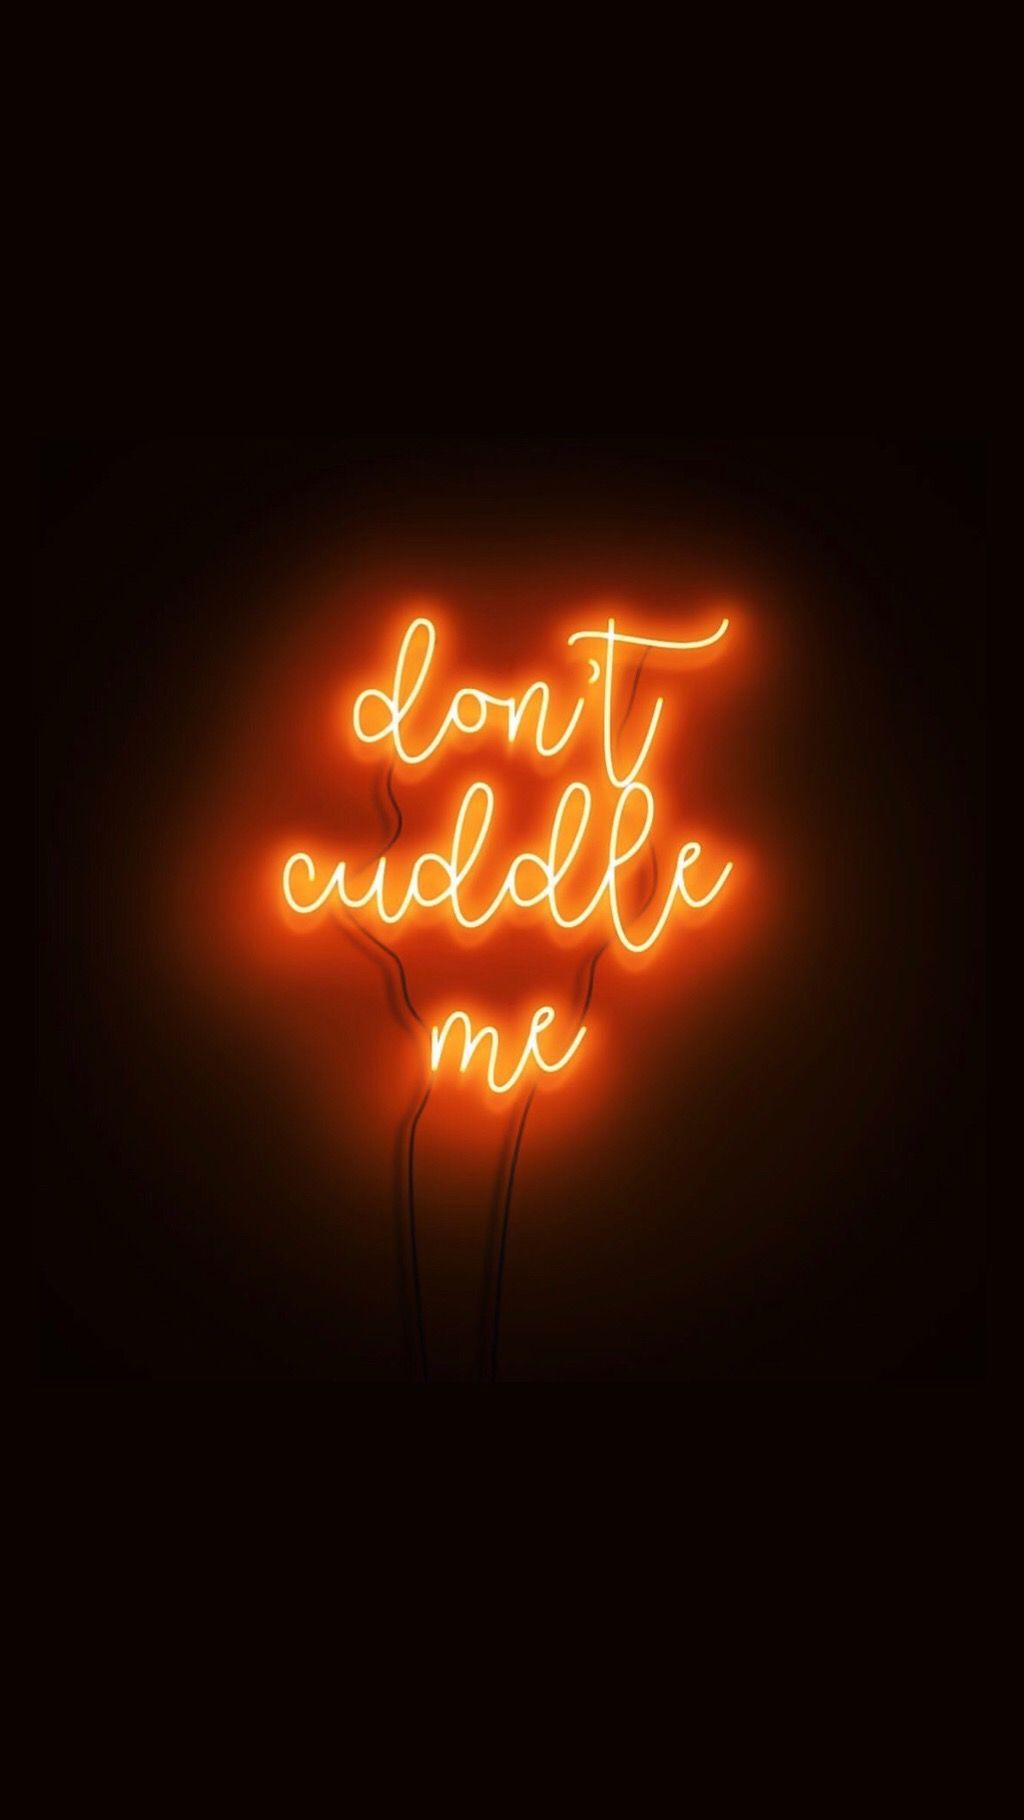 A neon sign that says don't hug me - Neon orange